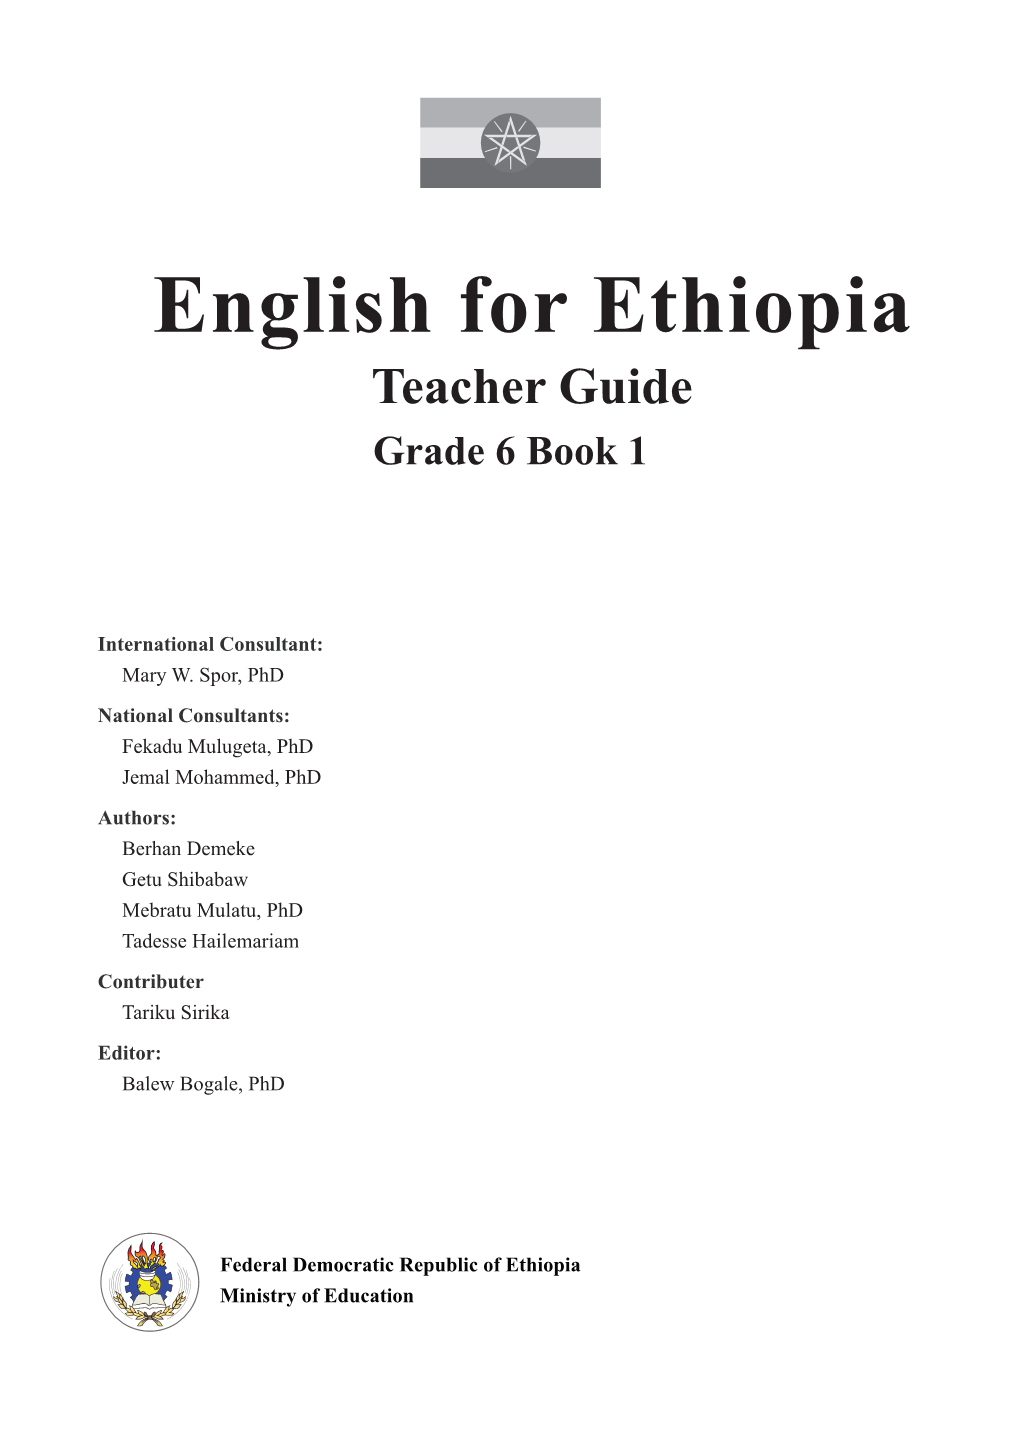 English for Ethiopia Teacher Guide Grade 6 Book 1